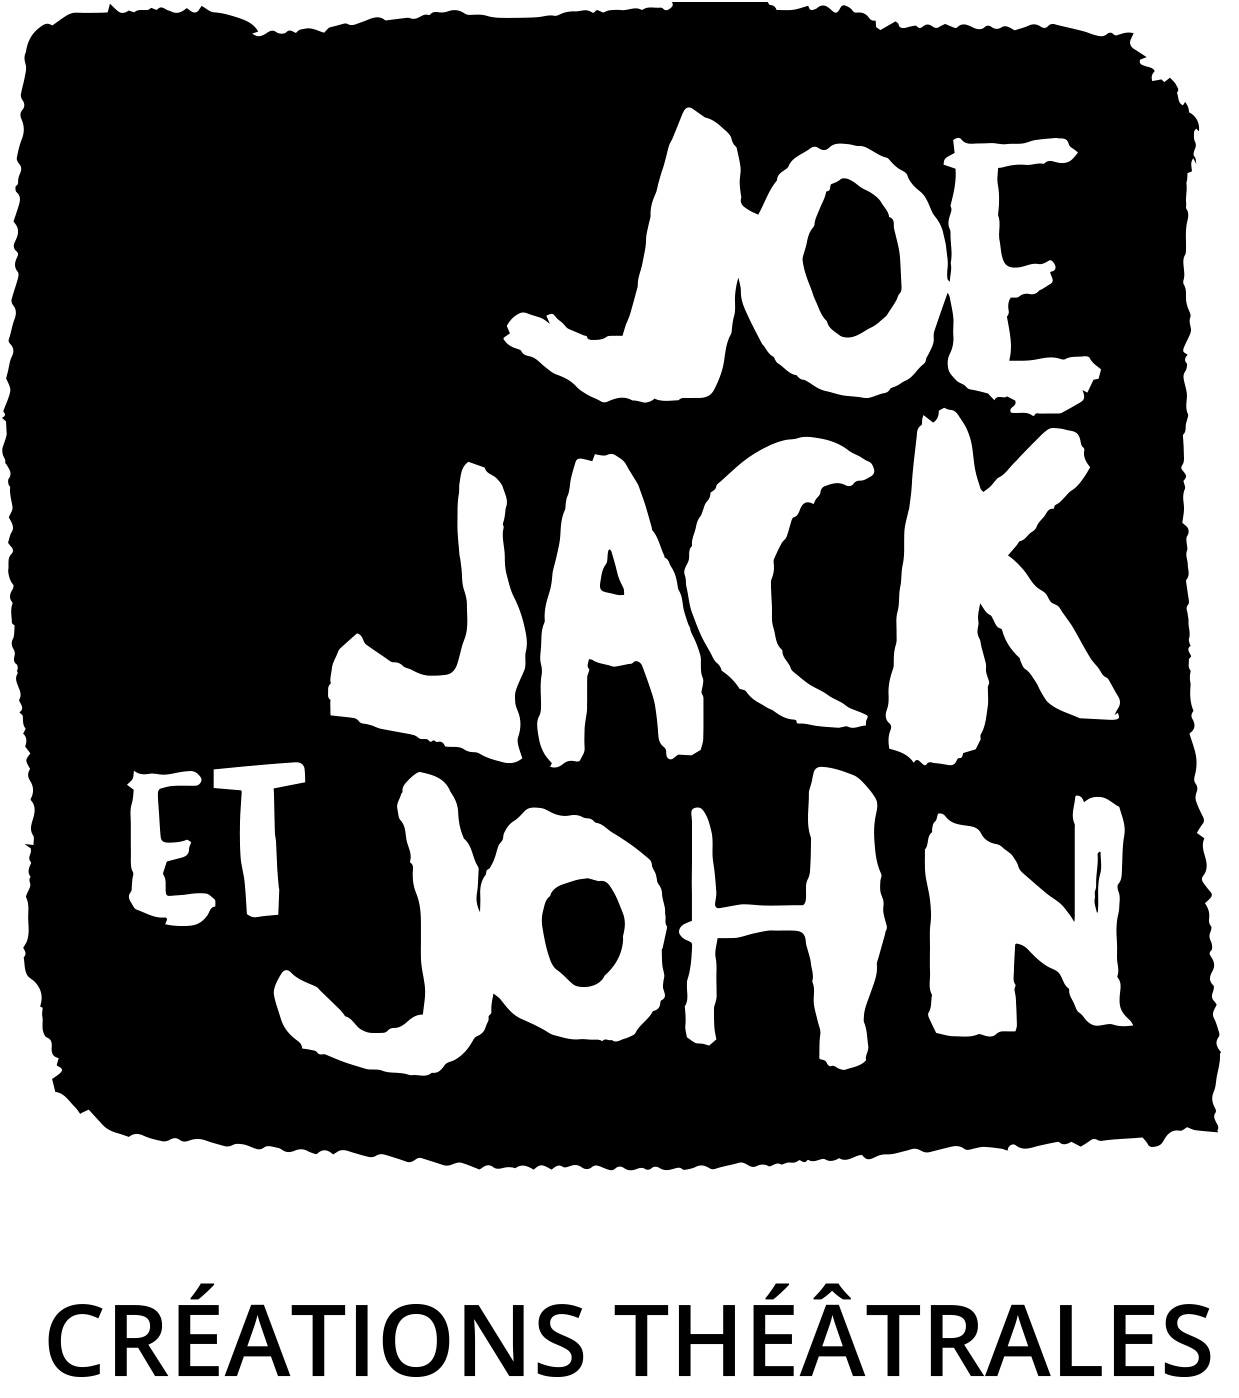 Joe Jack Et John logo